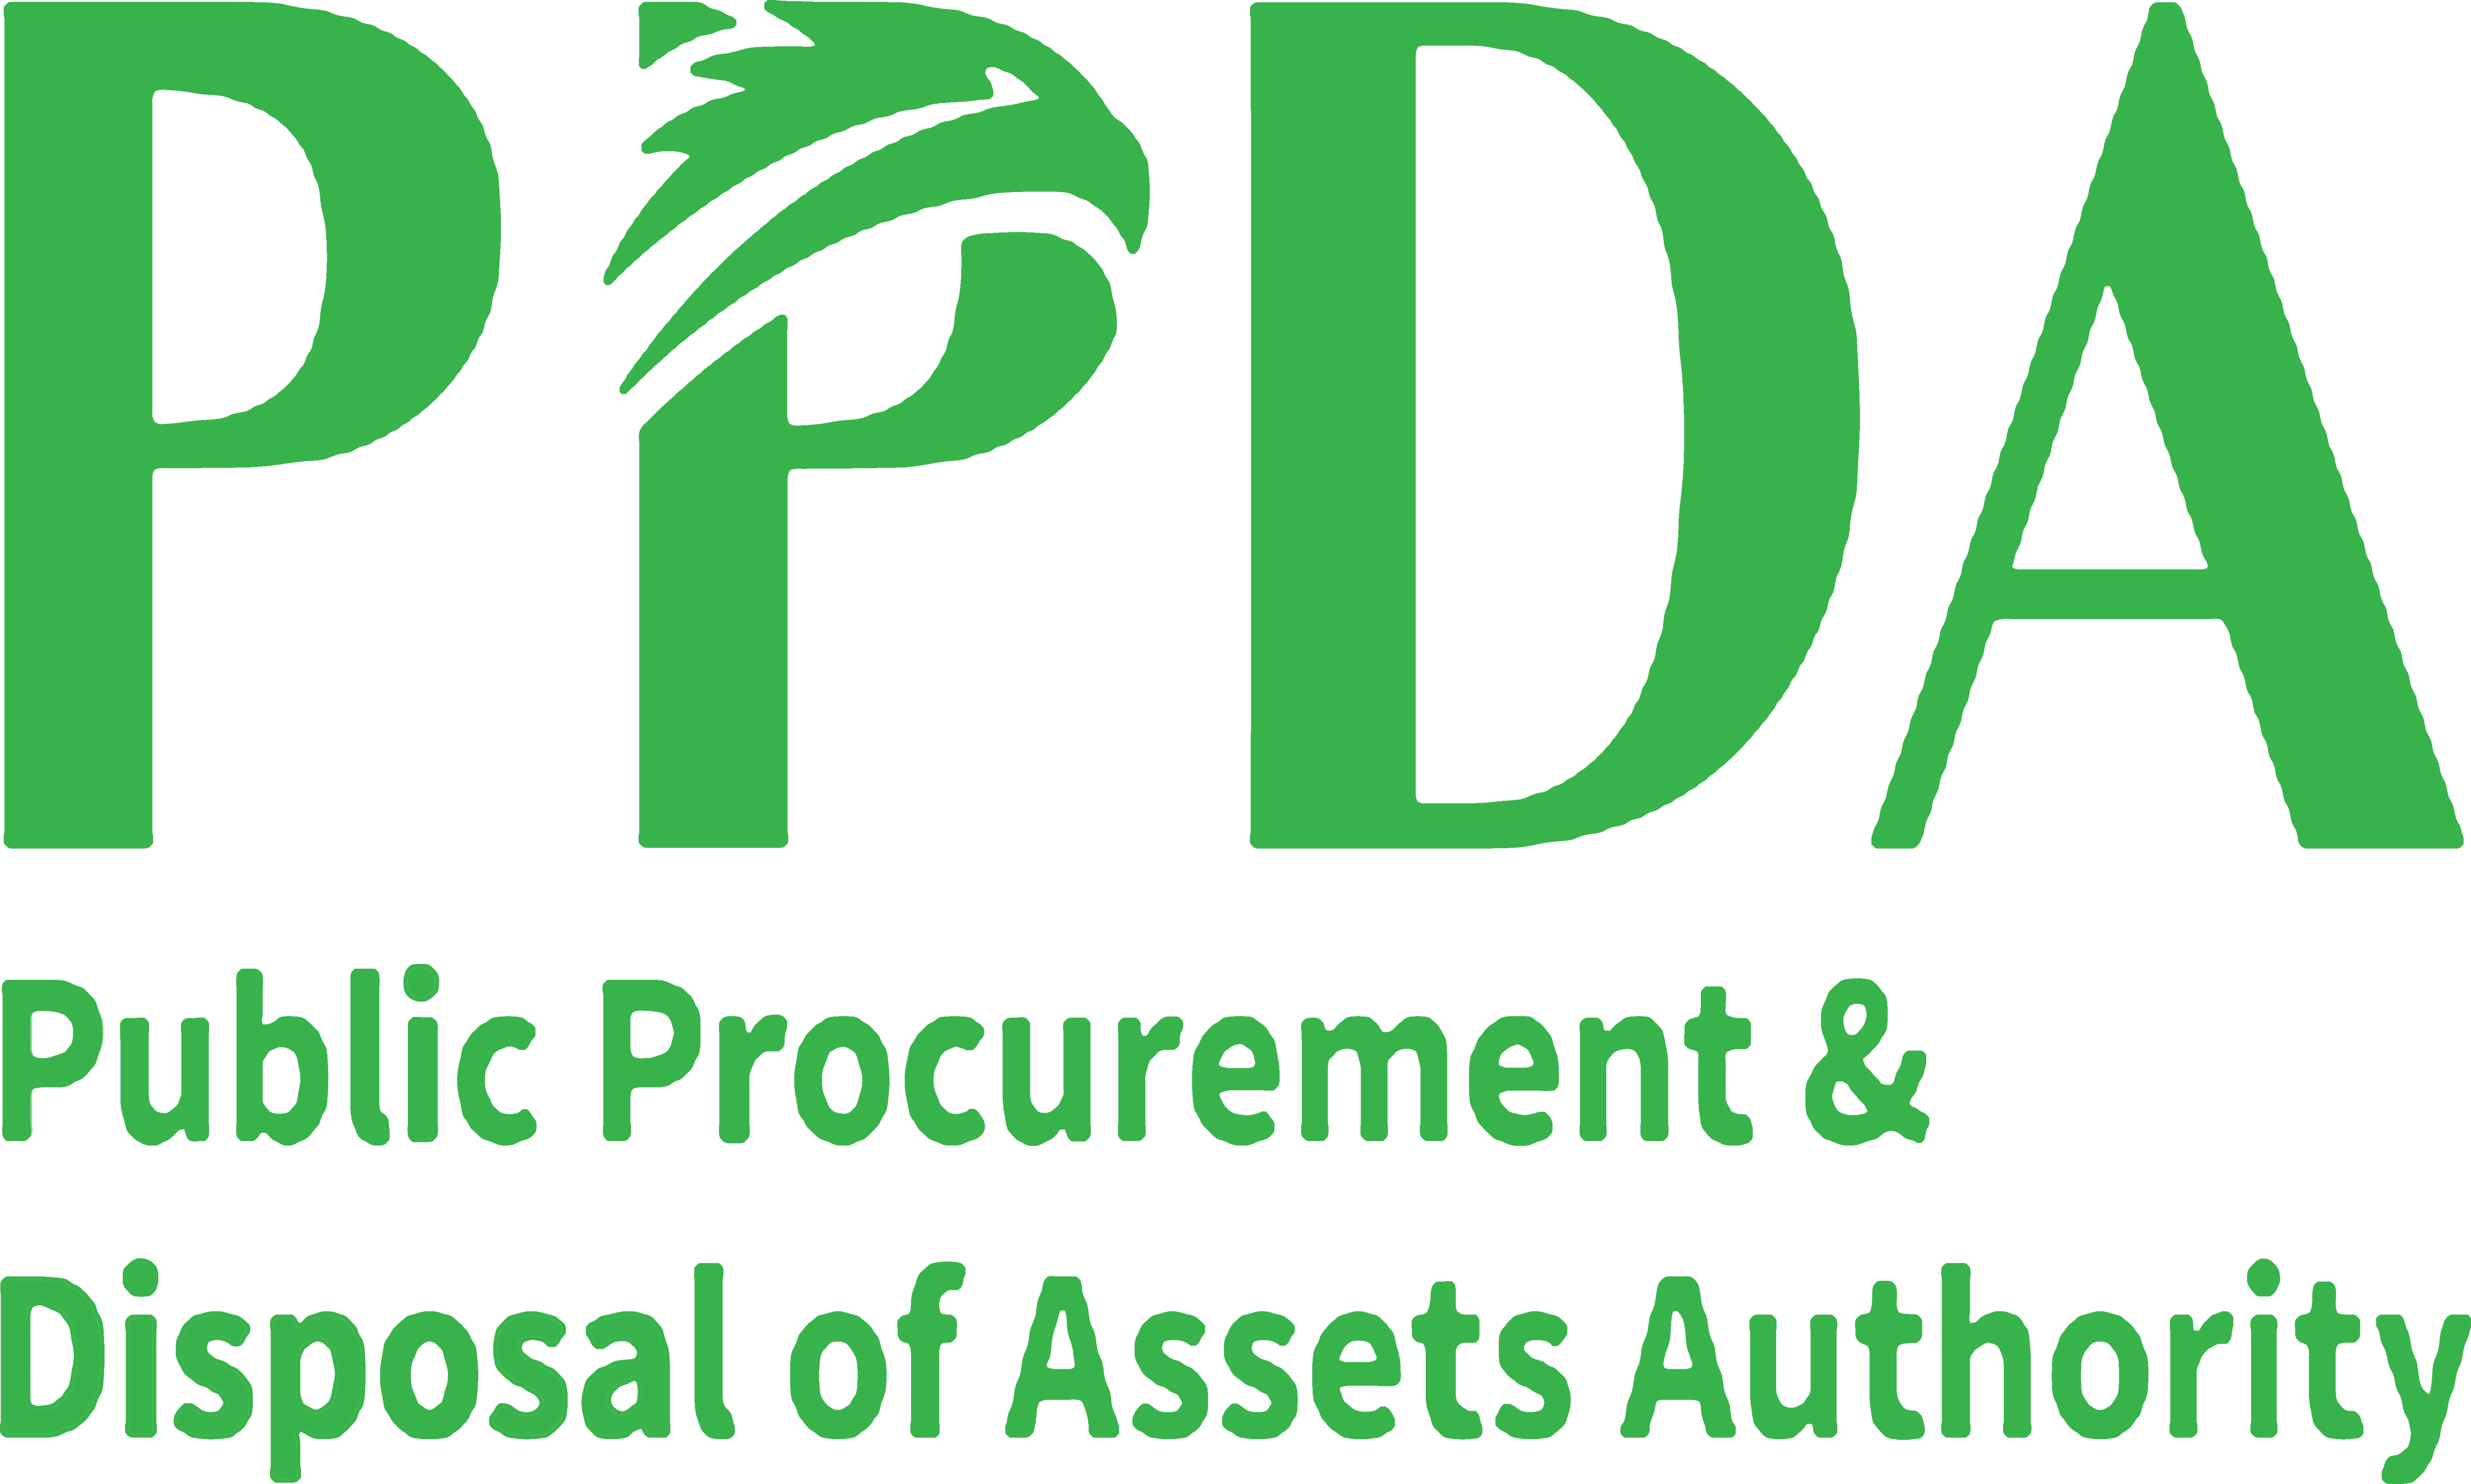 PPDA logo